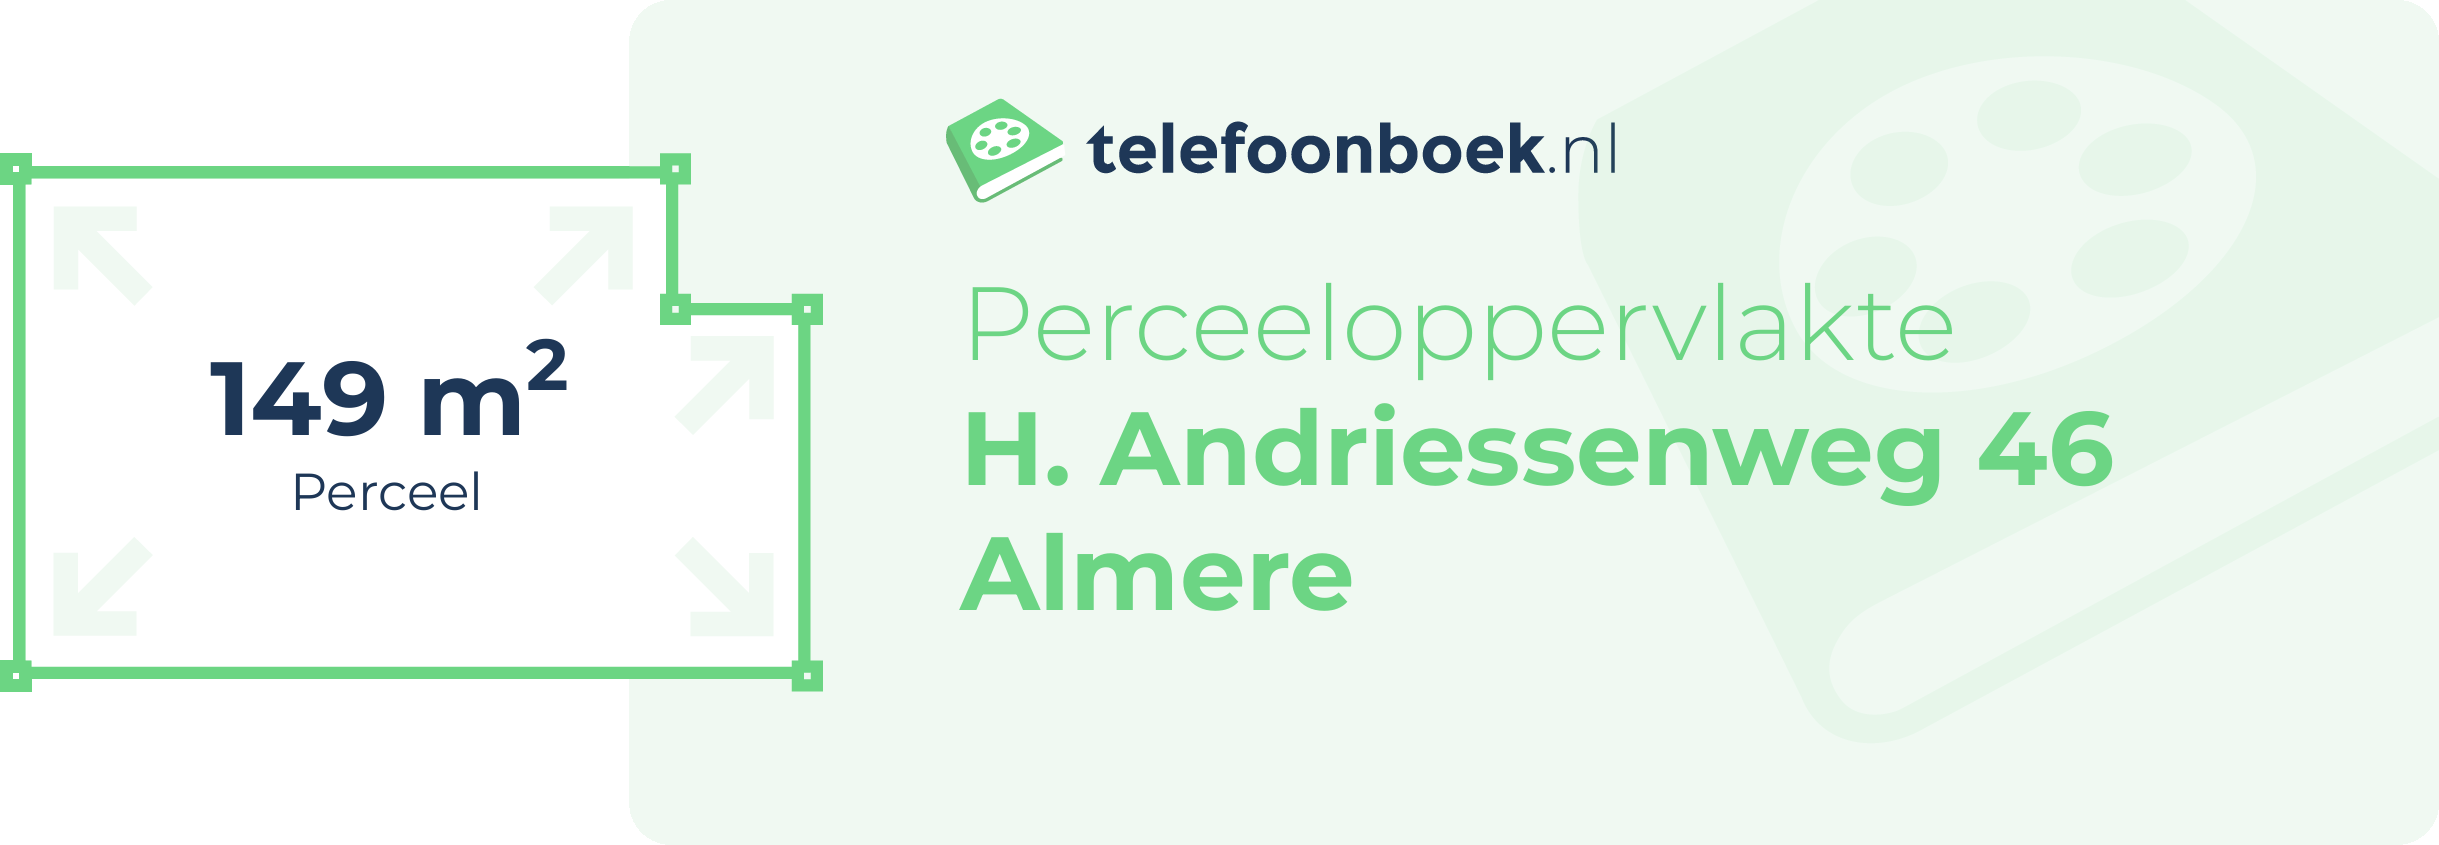 Perceeloppervlakte H. Andriessenweg 46 Almere